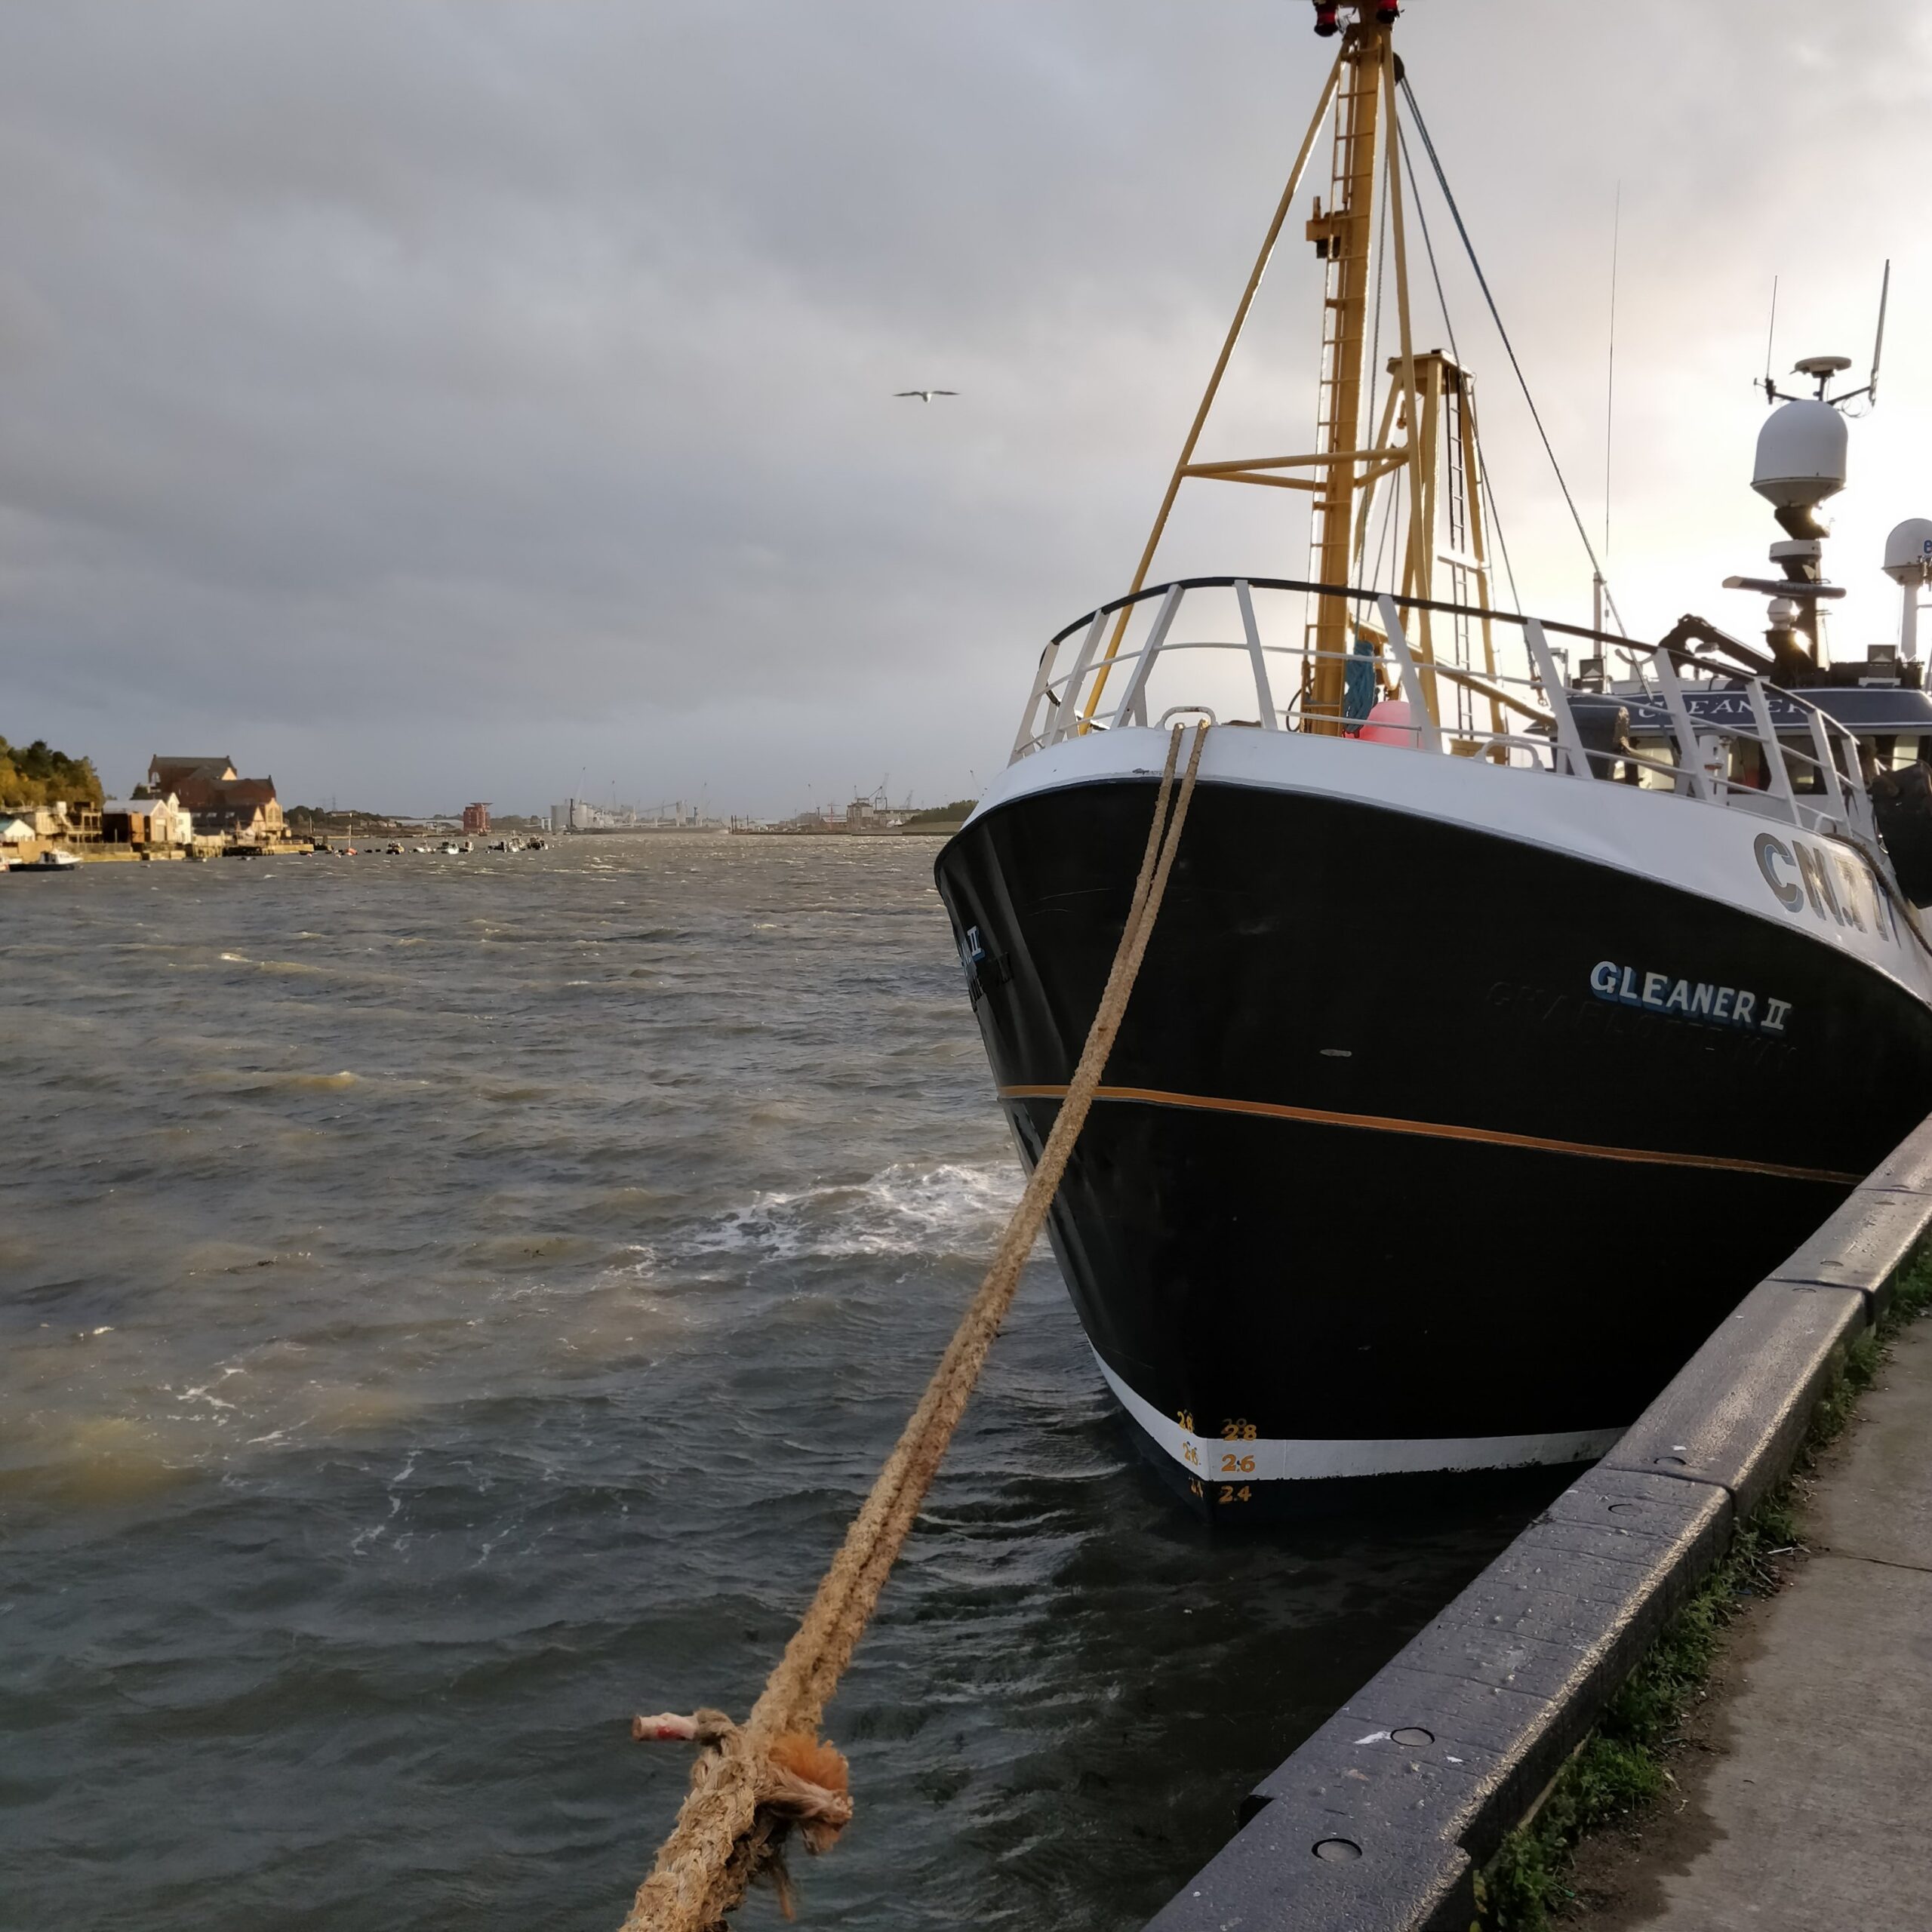 Gleaner II – alongisde North Shields fish quay